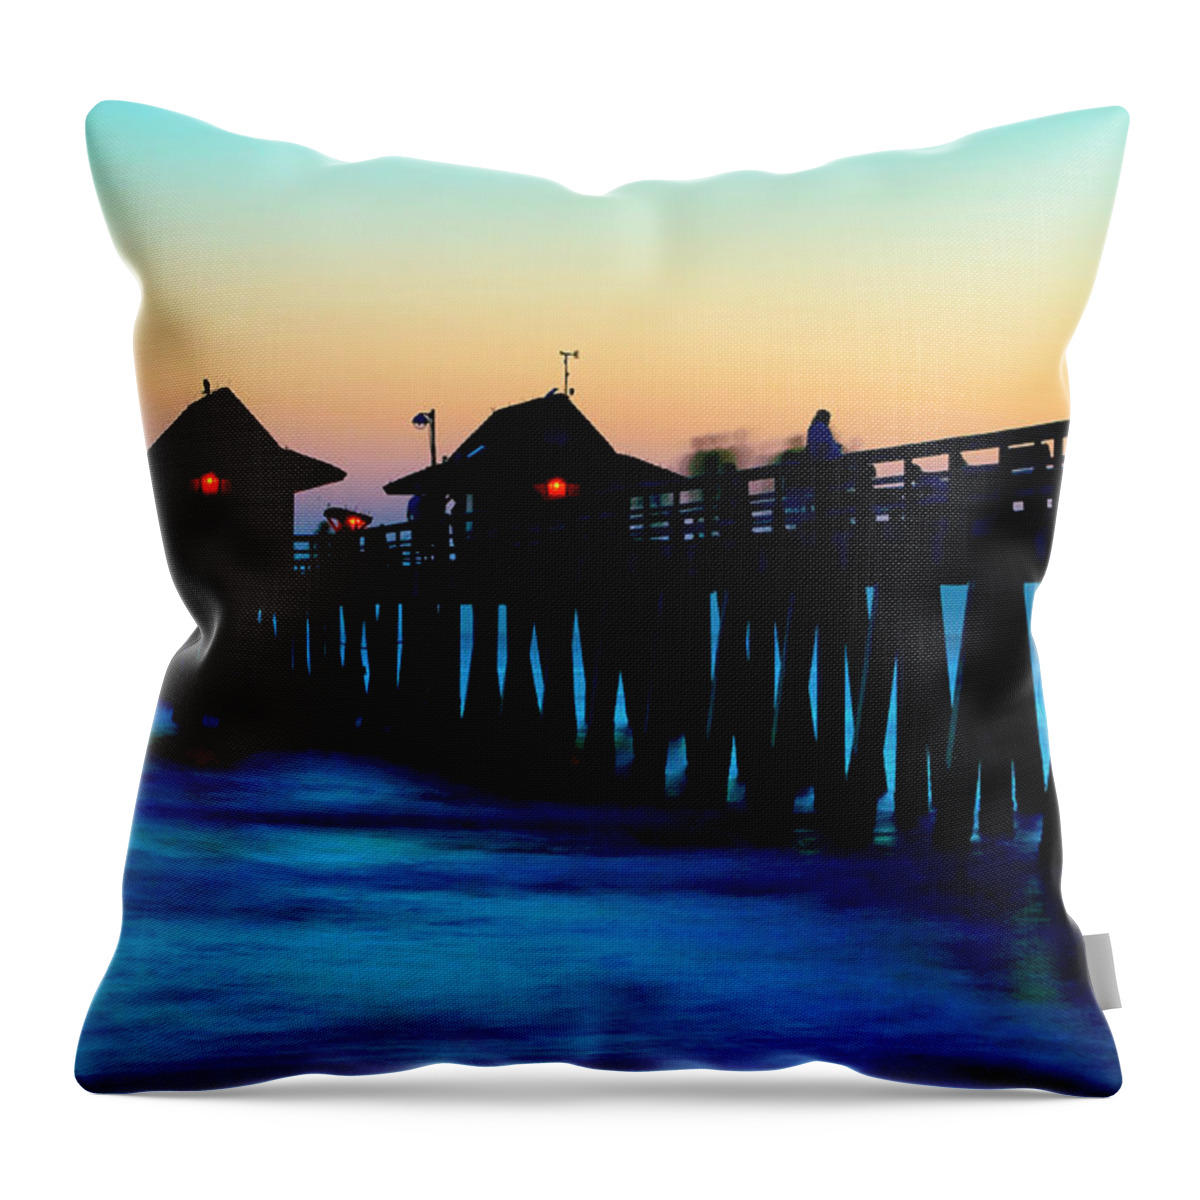 Estock Throw Pillow featuring the digital art Beach In Naples Florida by Claudia Uripos